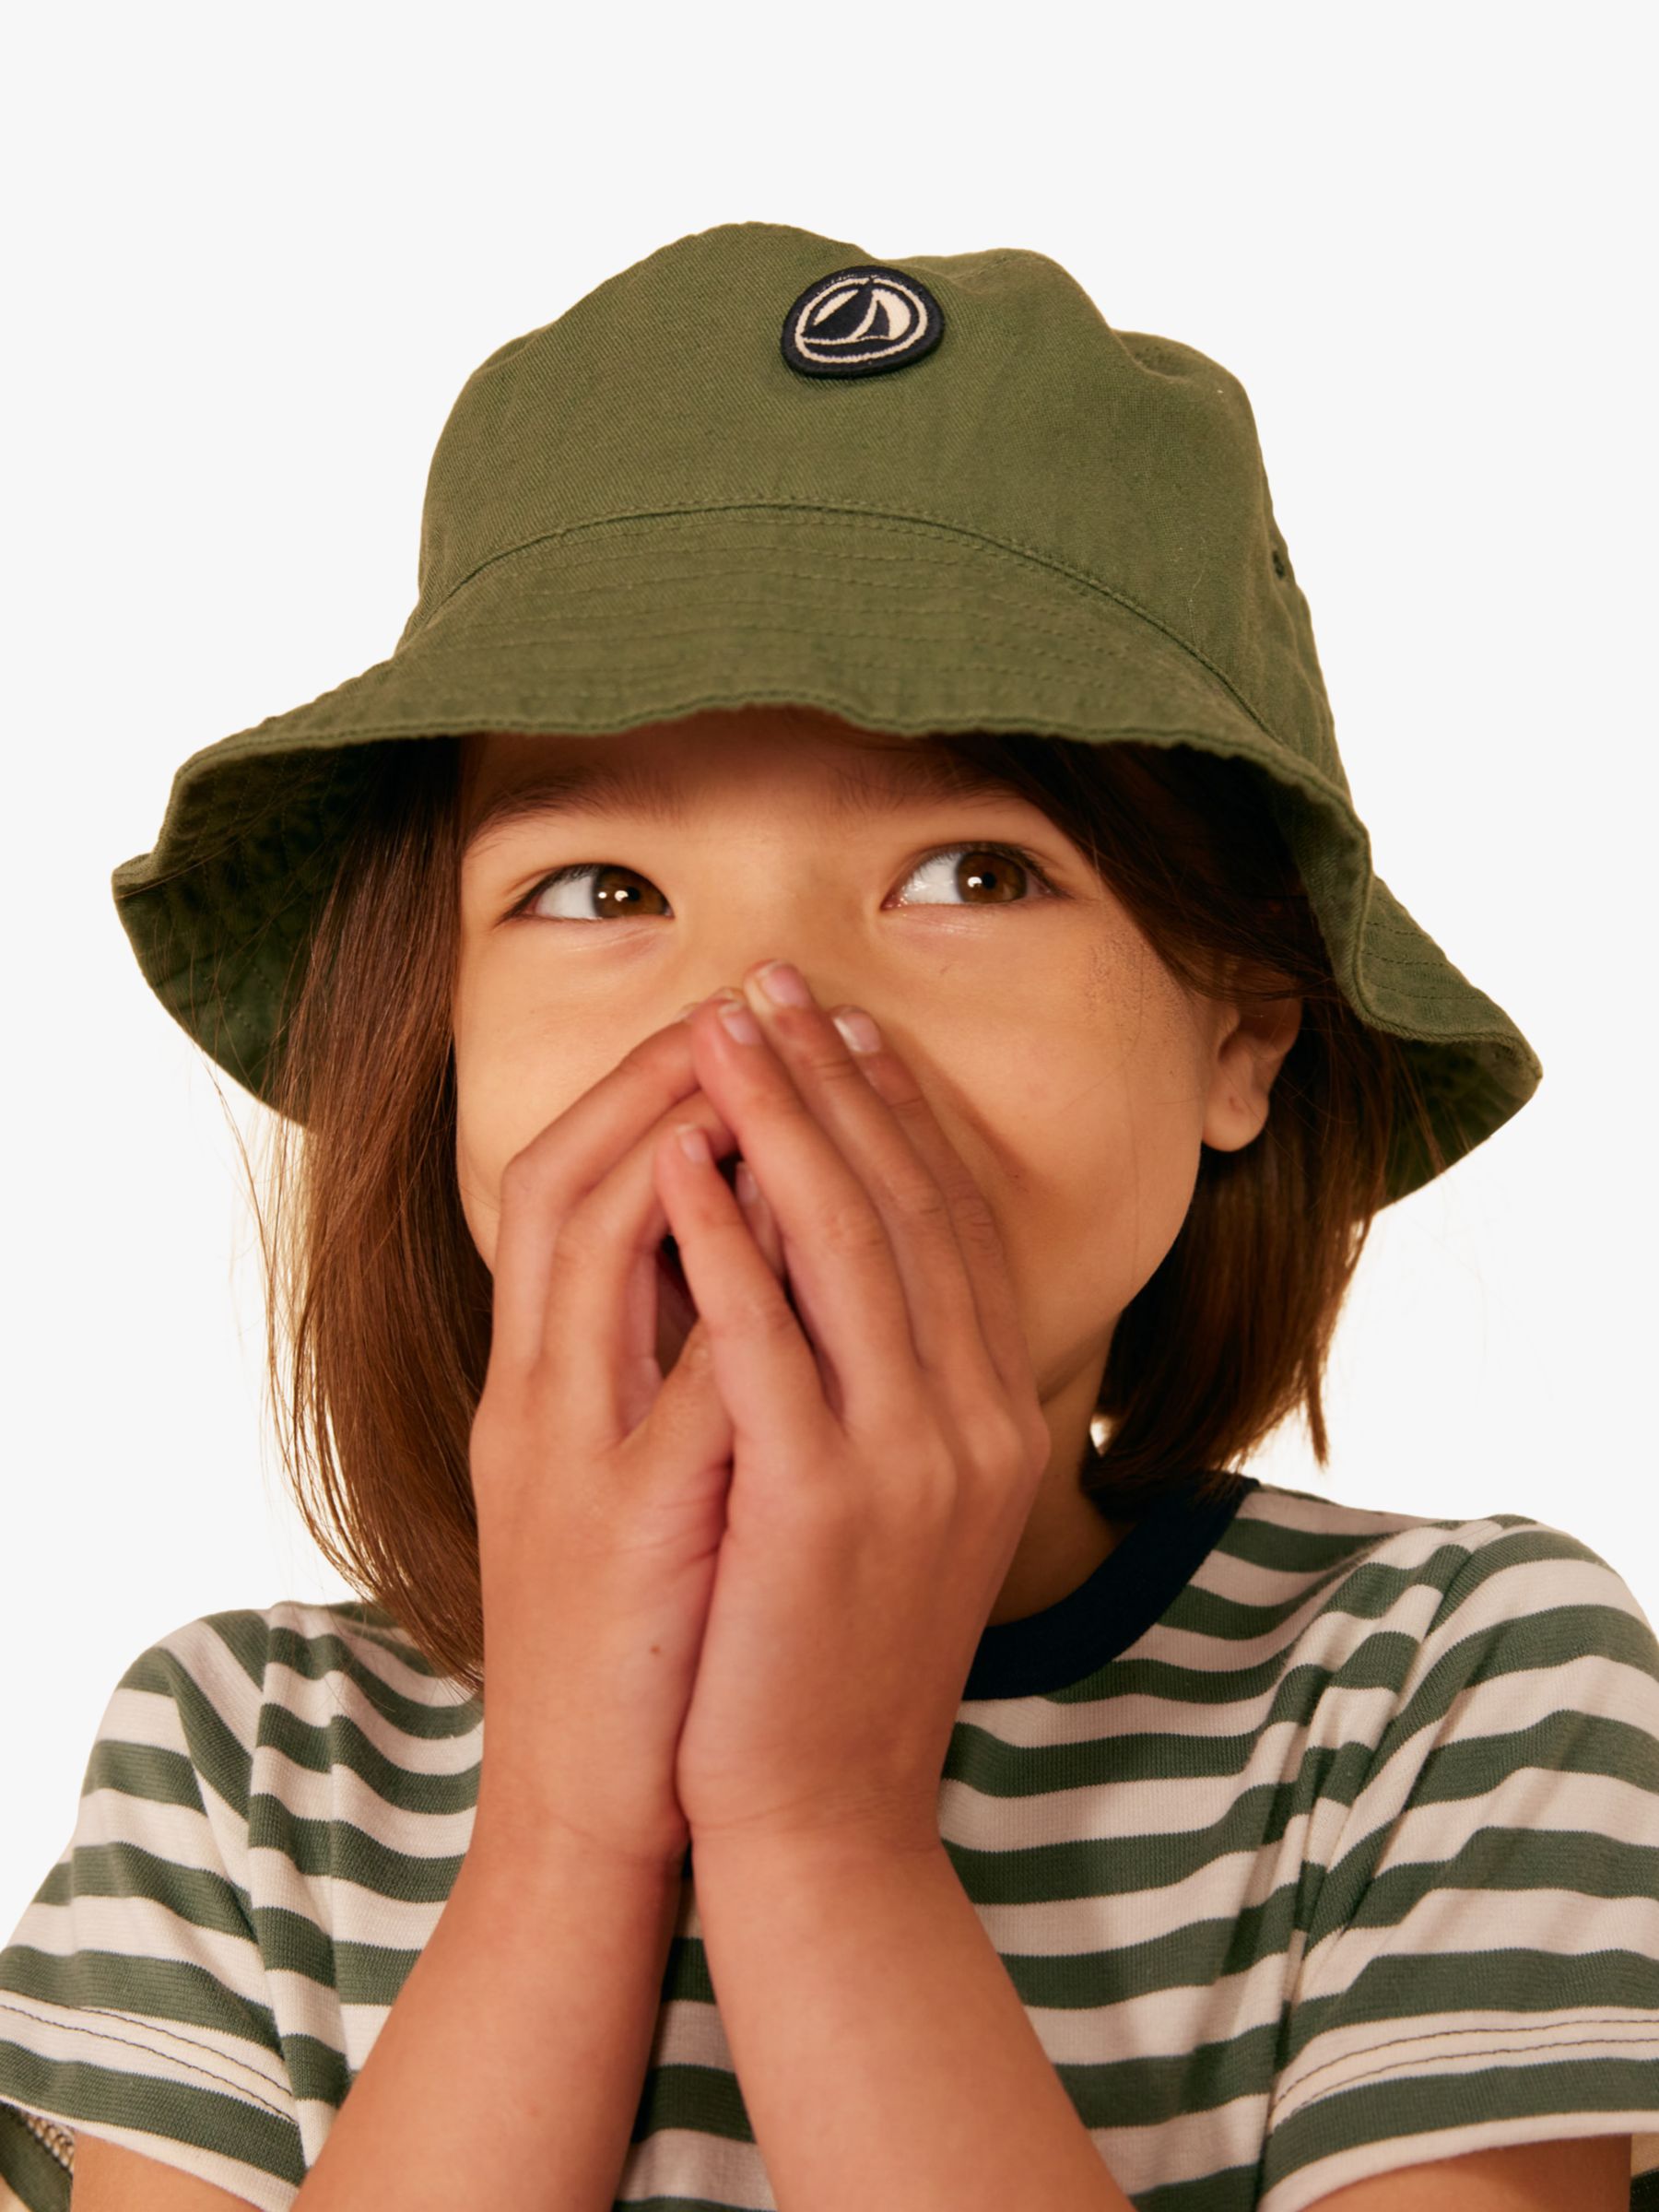 Petit Bateau Kids' Logo Solid Bucket Hat, Croco, 3-4 years